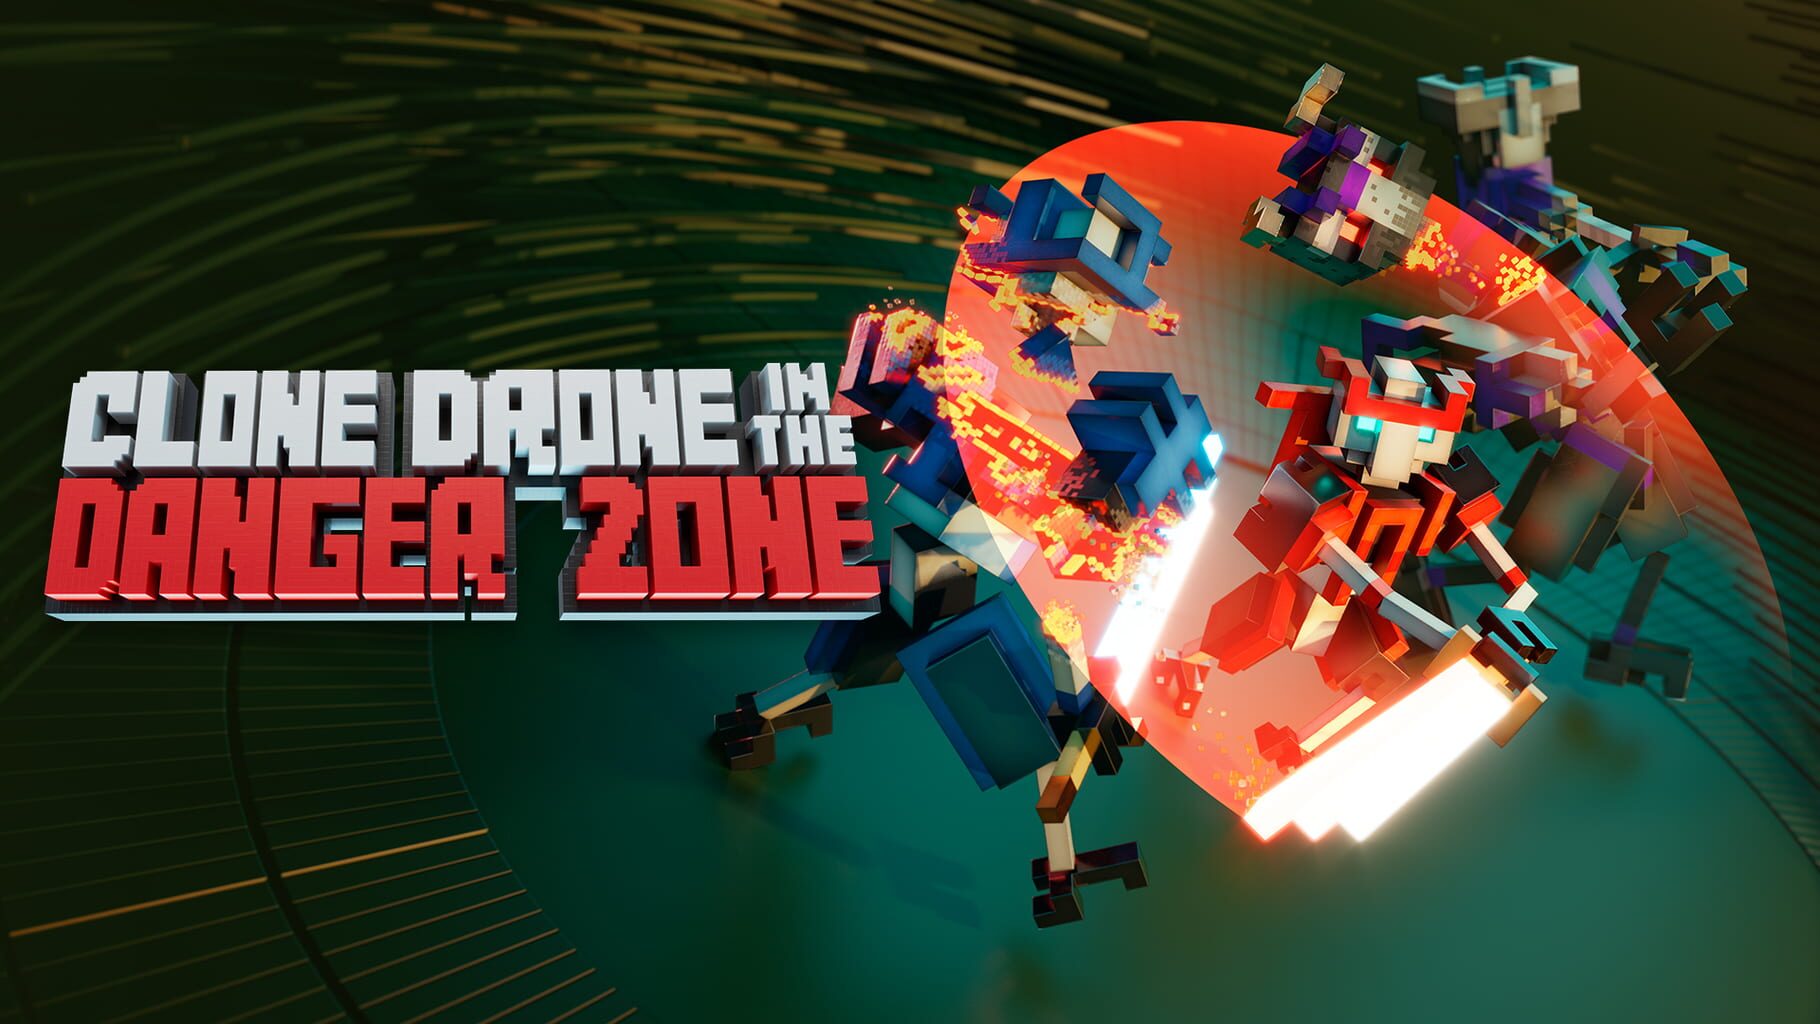 Clone Drone in the Danger Zone artwork